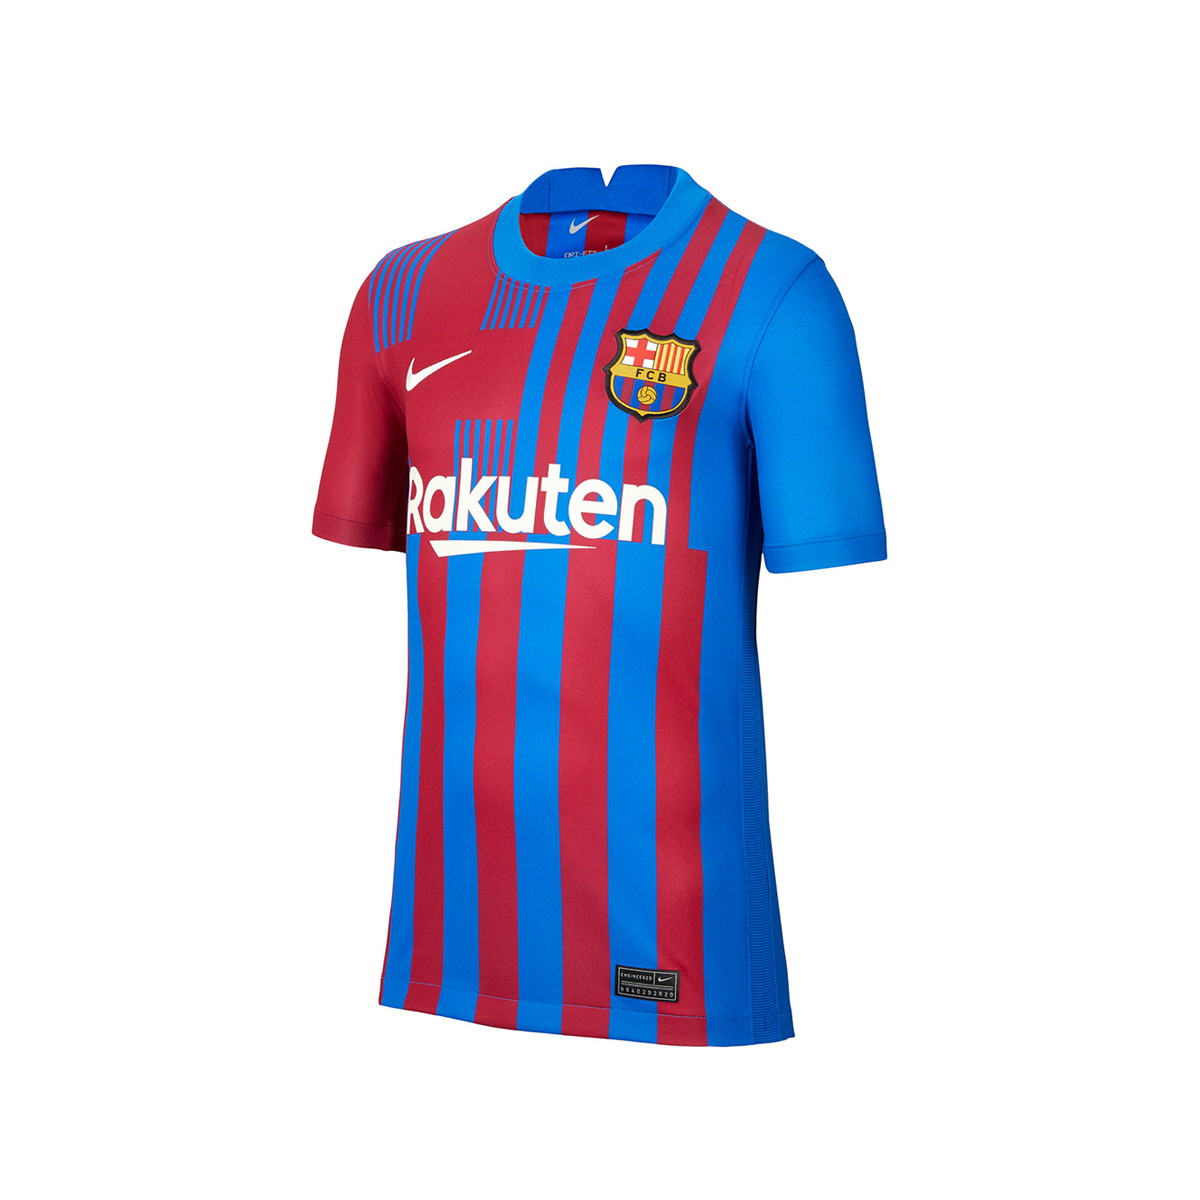 Camiseta Nike Fc Barcelona 2021/22 Stadium Home Infantil,  image number null